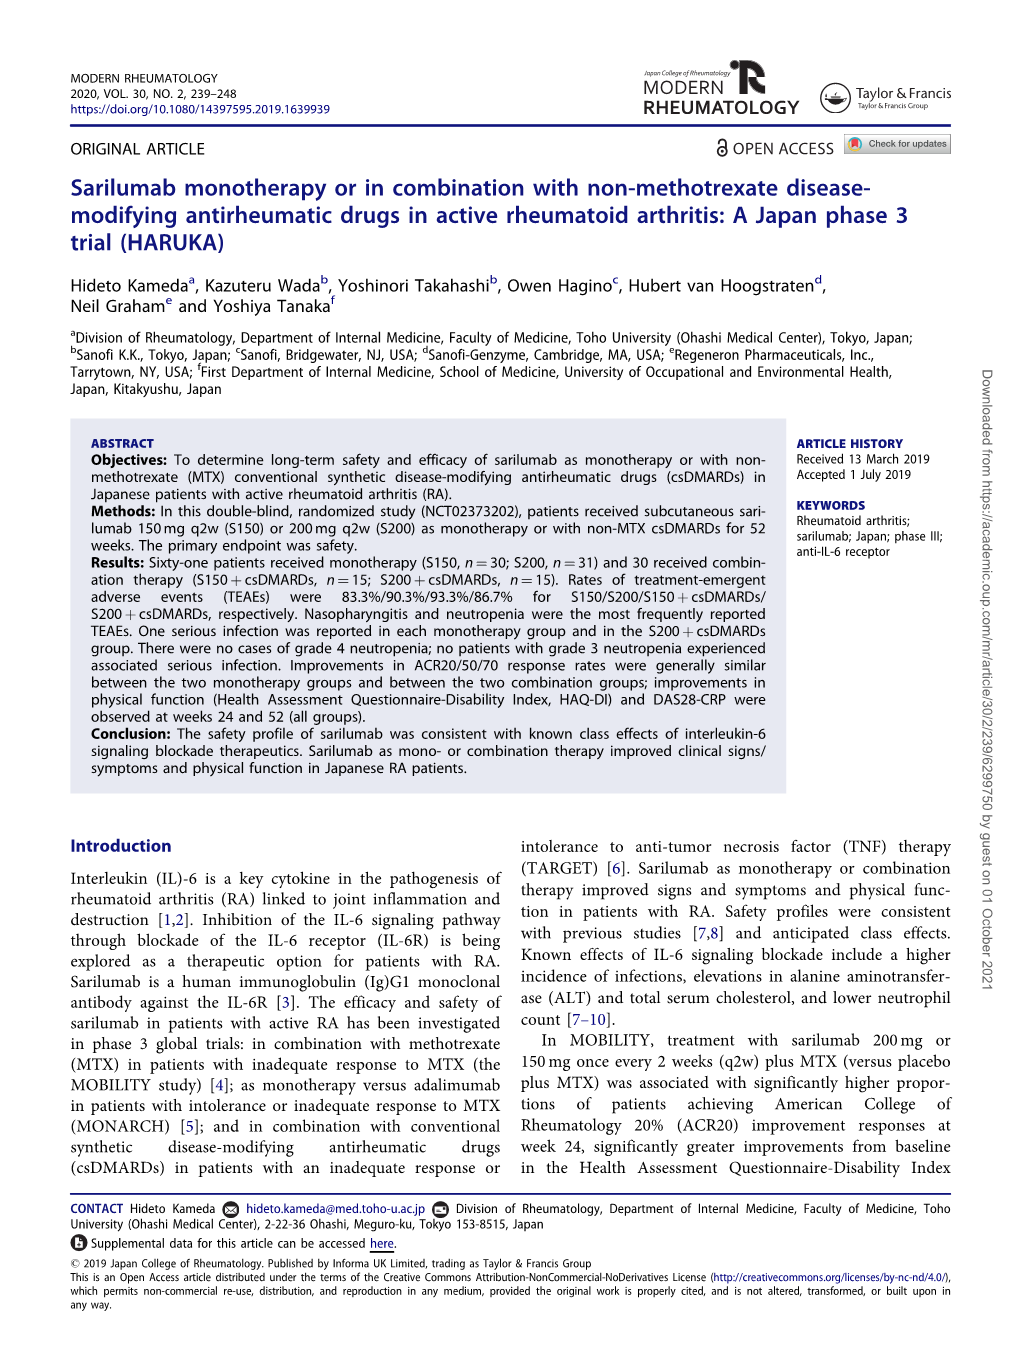 Modifying Antirheumatic Drugs in Active Rheumatoid Arthritis: a Japan Phase 3 Trial (HARUKA)